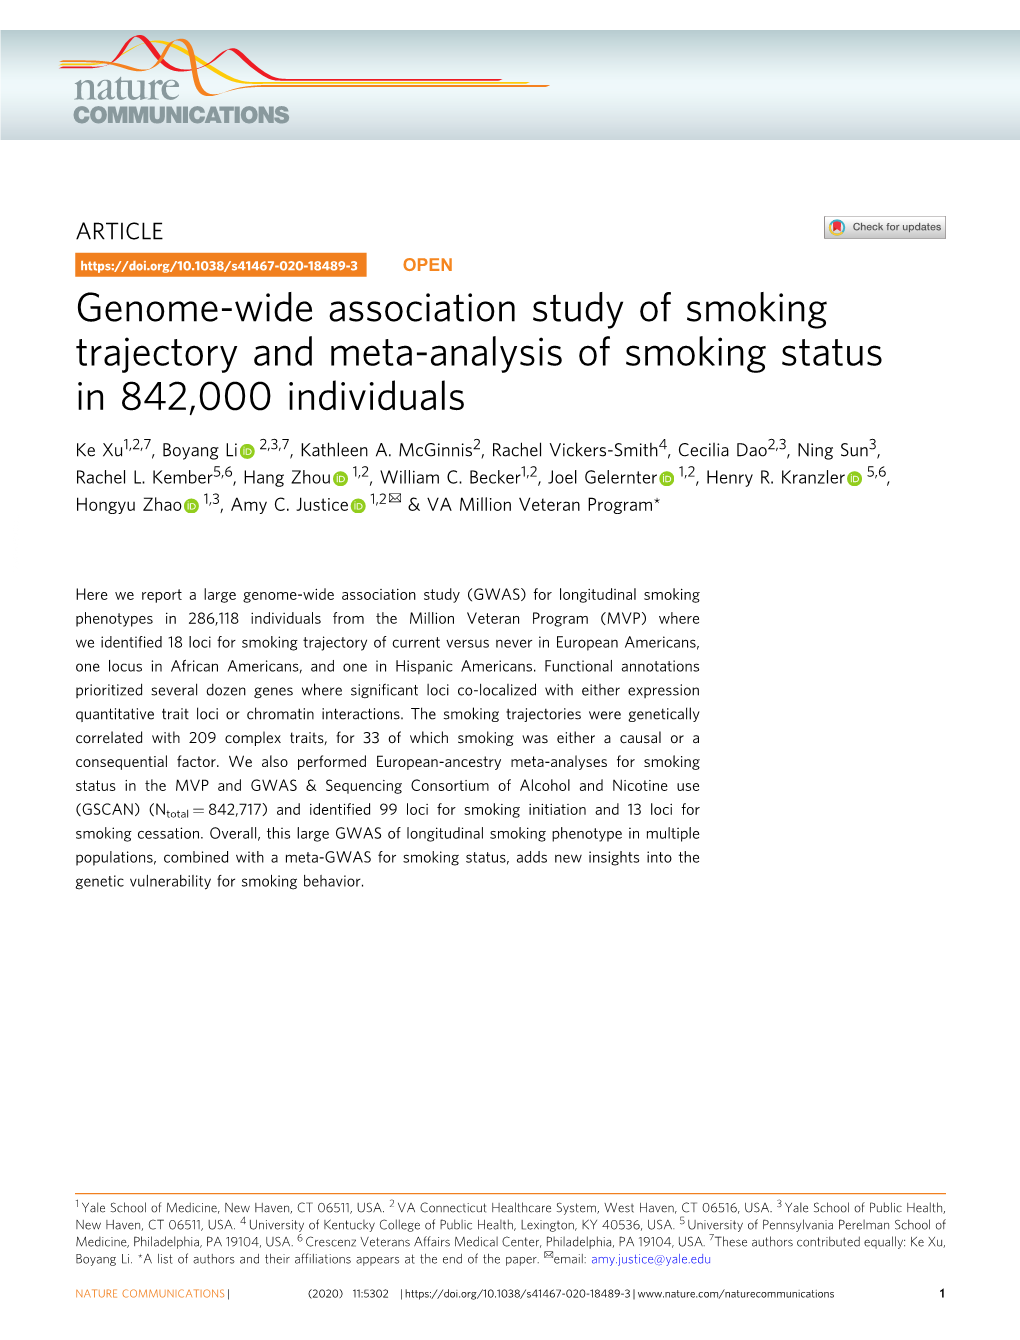 Genome-Wide Association Study of Smoking Trajectory and Meta-Analysis of Smoking Status in 842,000 Individuals